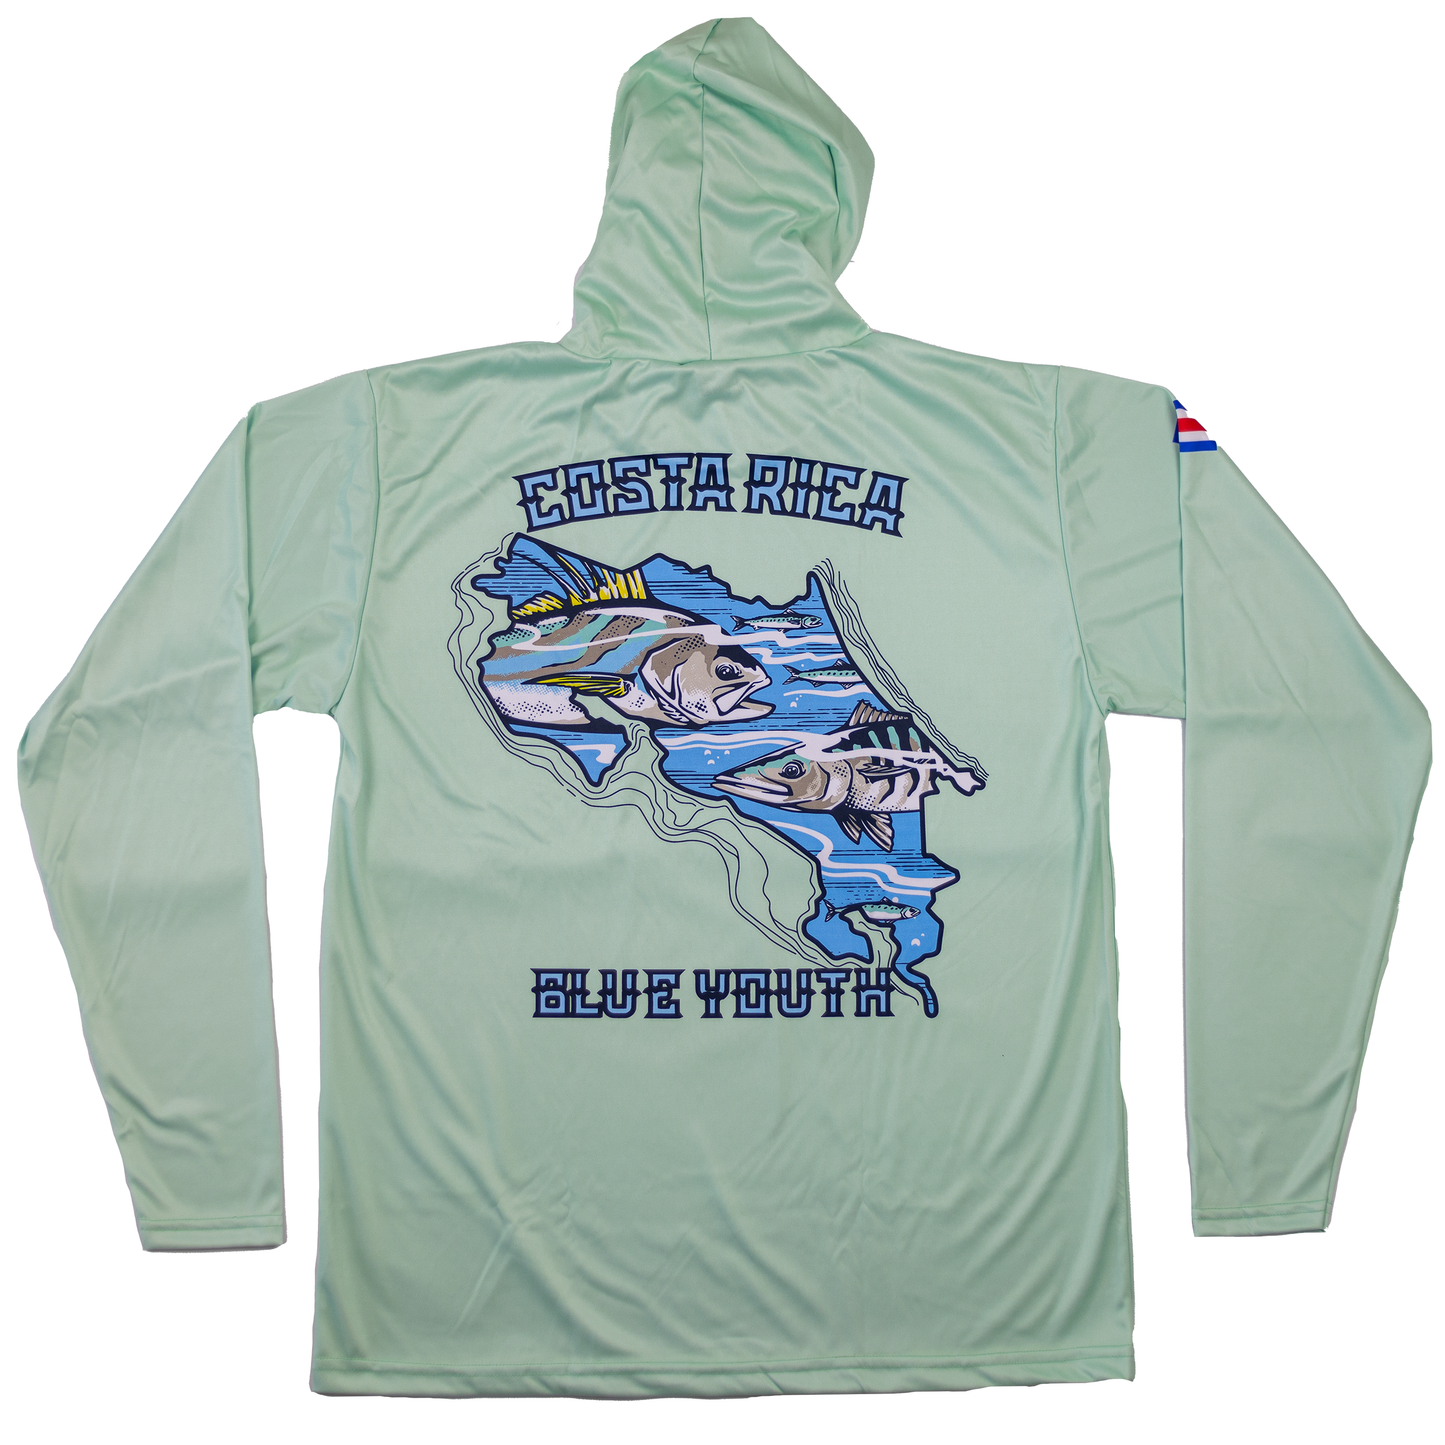 A Cachete - Fishing Shirt